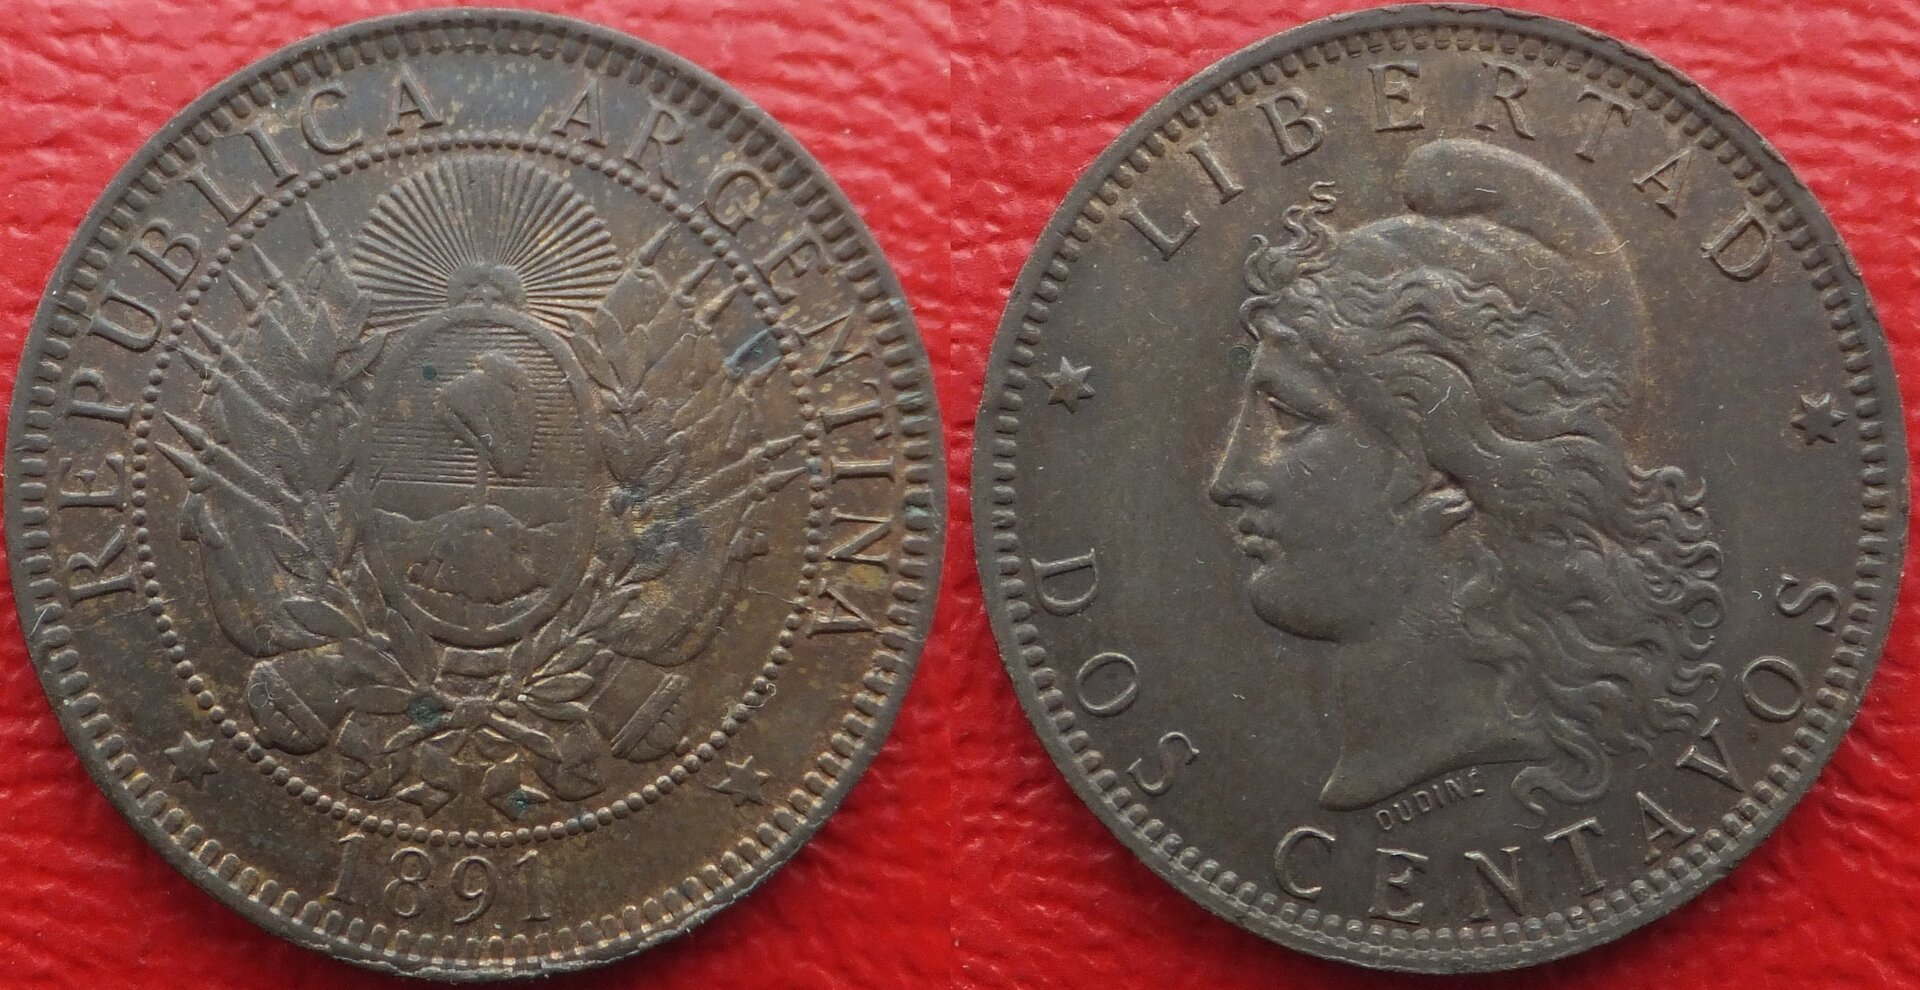 Argentina 2 centavos 1891 (32).jpg